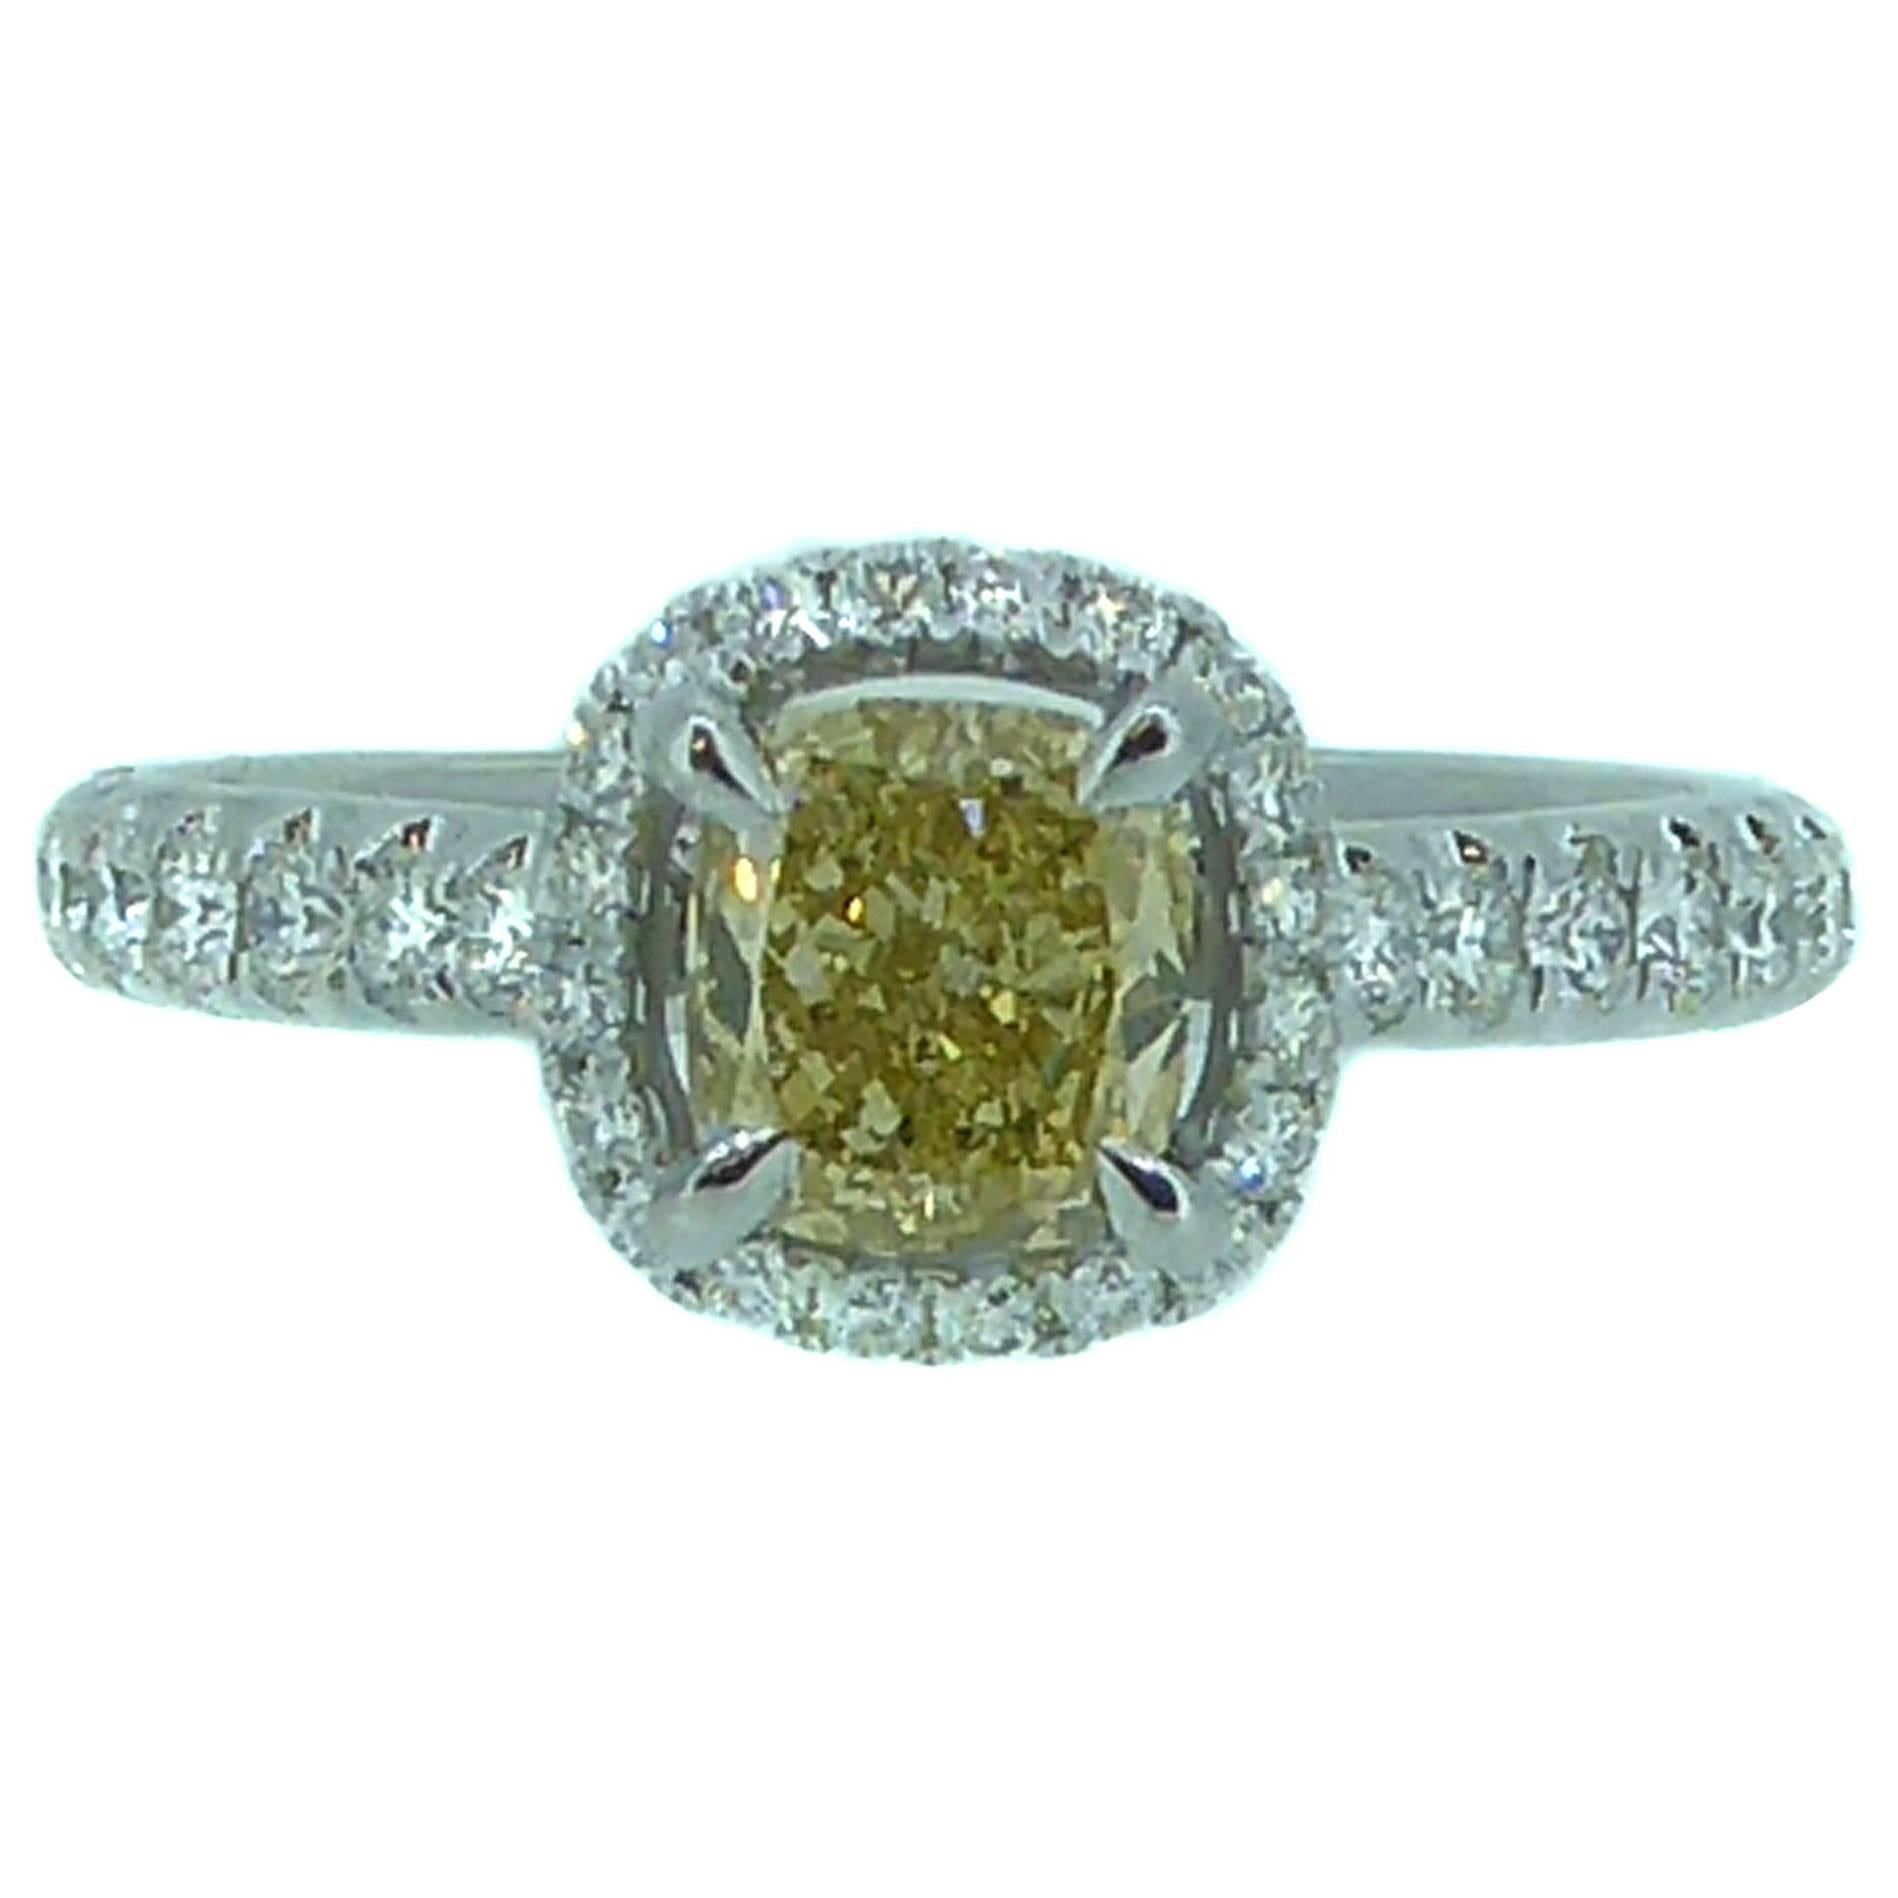 1.14 Carat Yellow Diamond Solitaire Engagement Ring, White Diamond Halo Surround